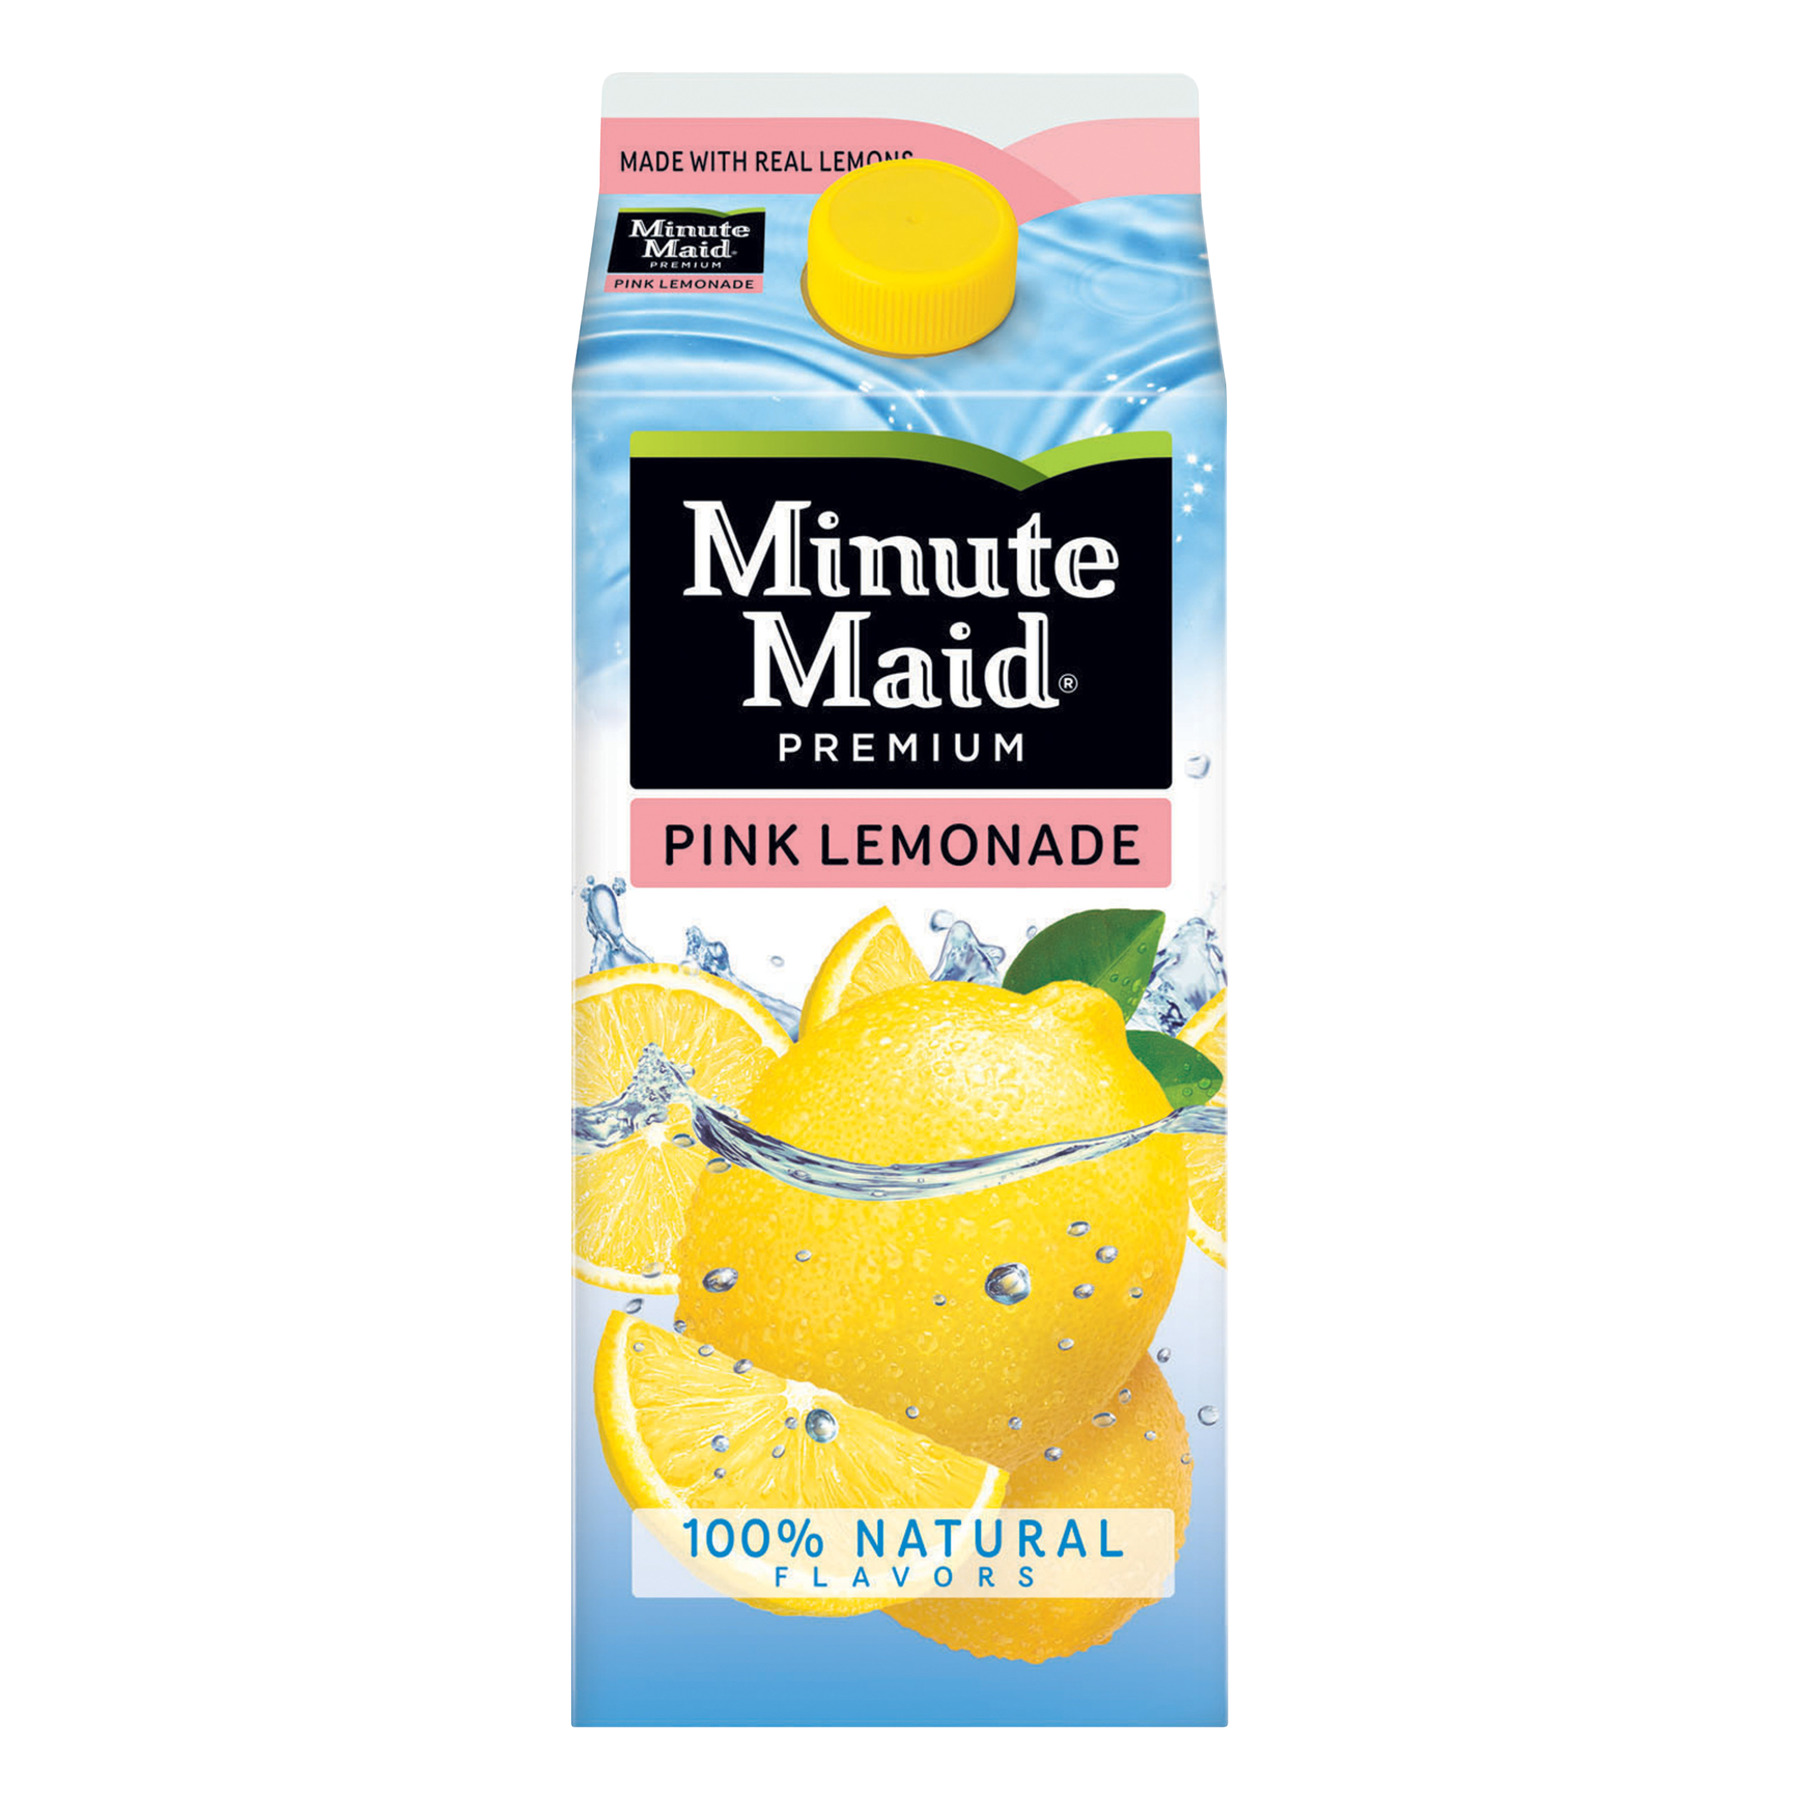 Minute Maid, Premium Pink Lemonade, 59 Fl. Oz. - Walmart.com - Walmart.com